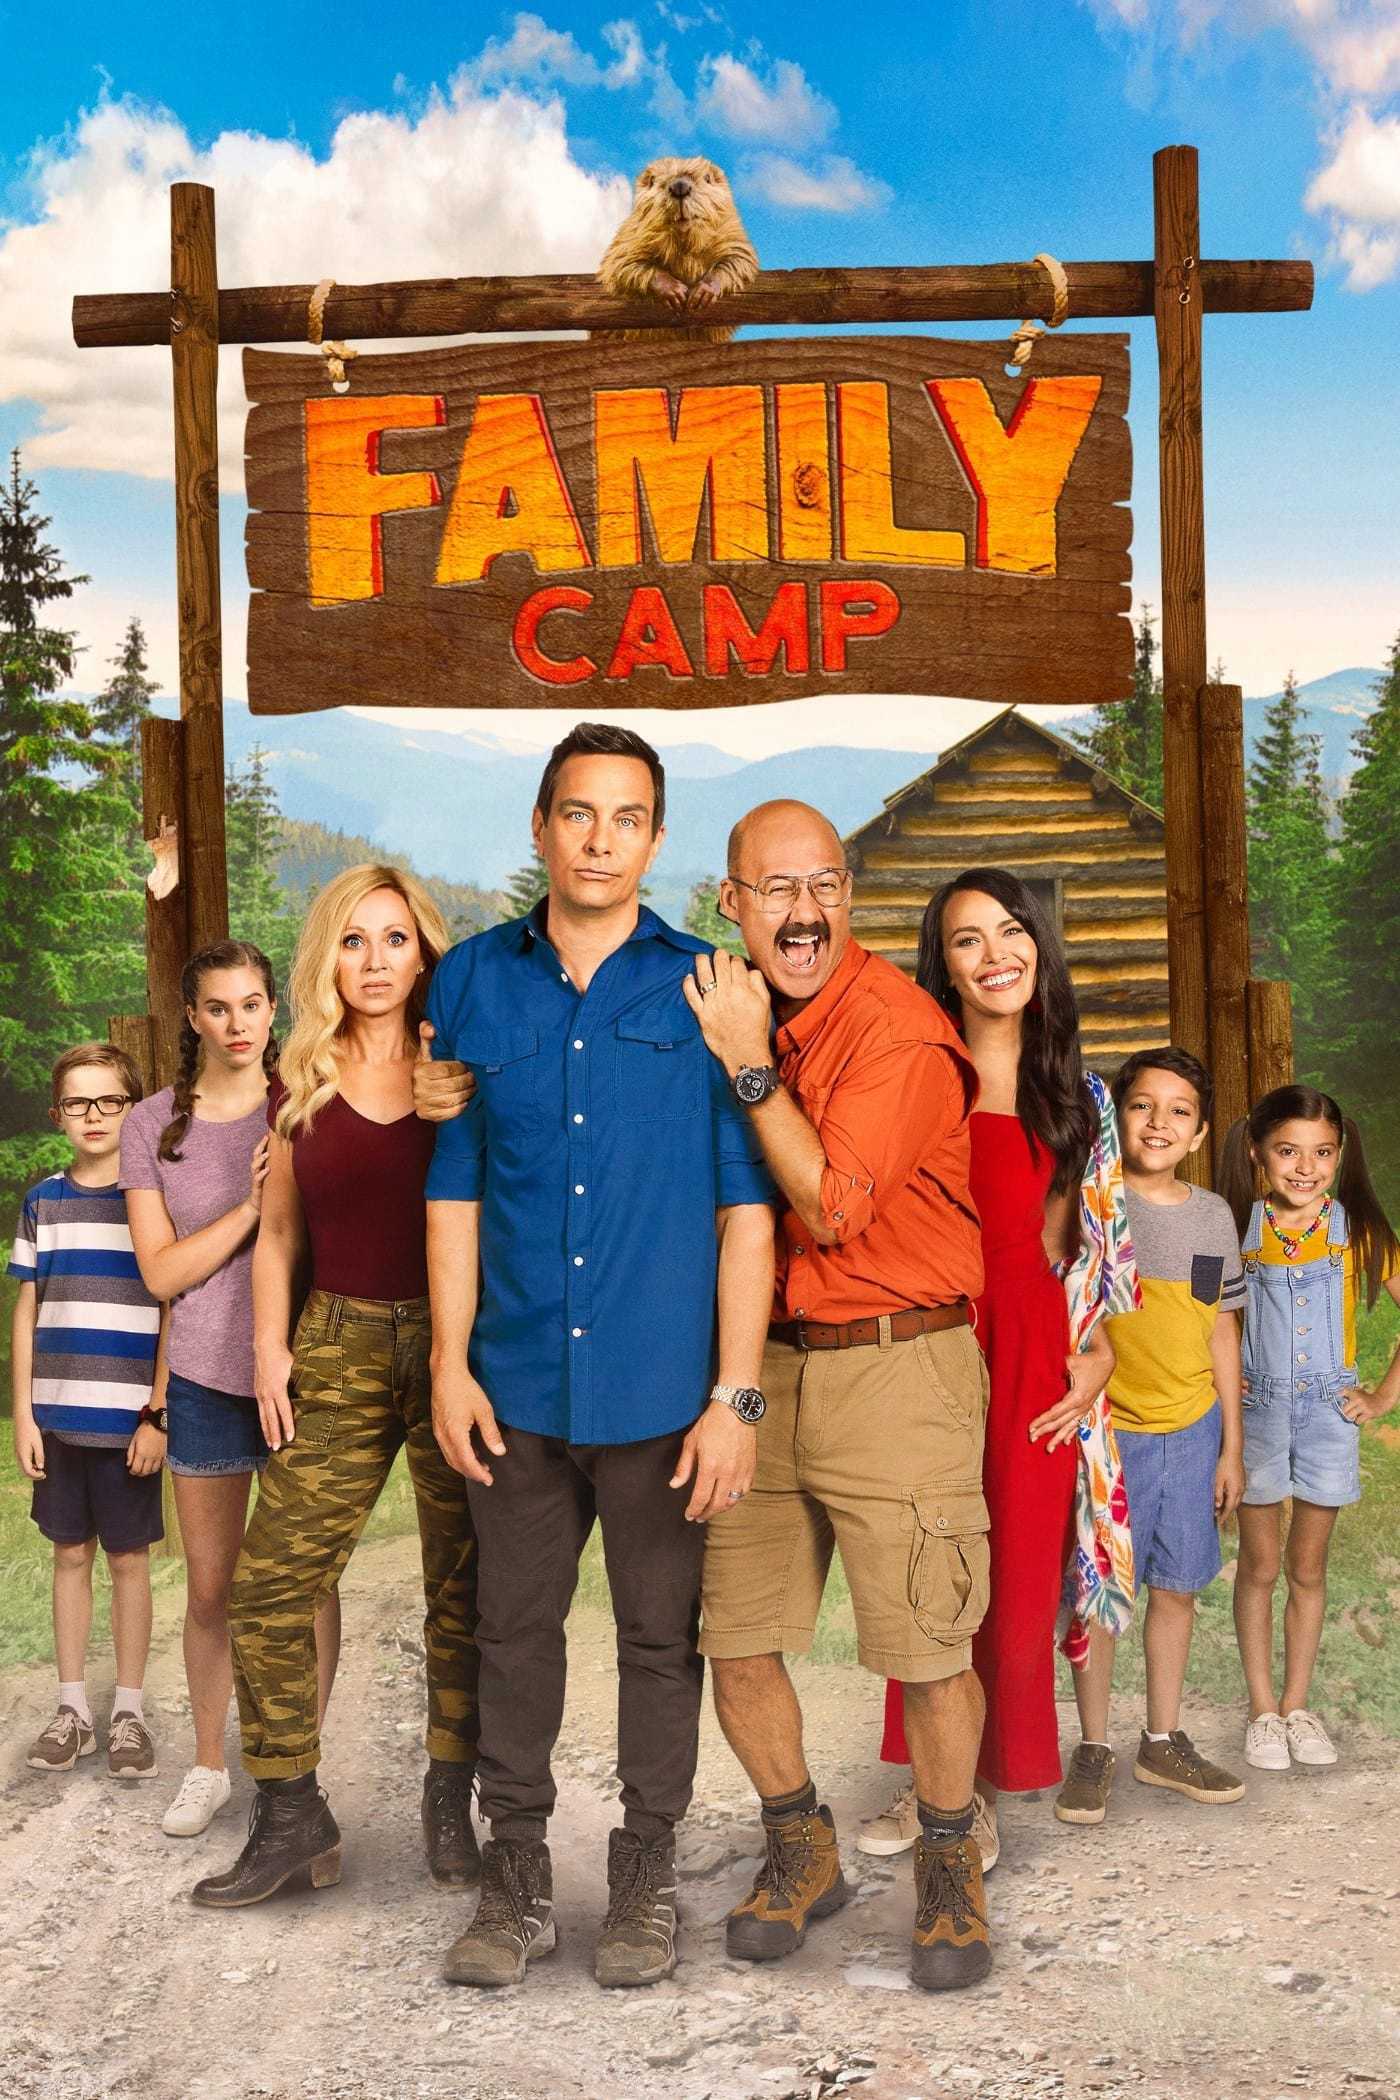 Family Camp - Family Camp